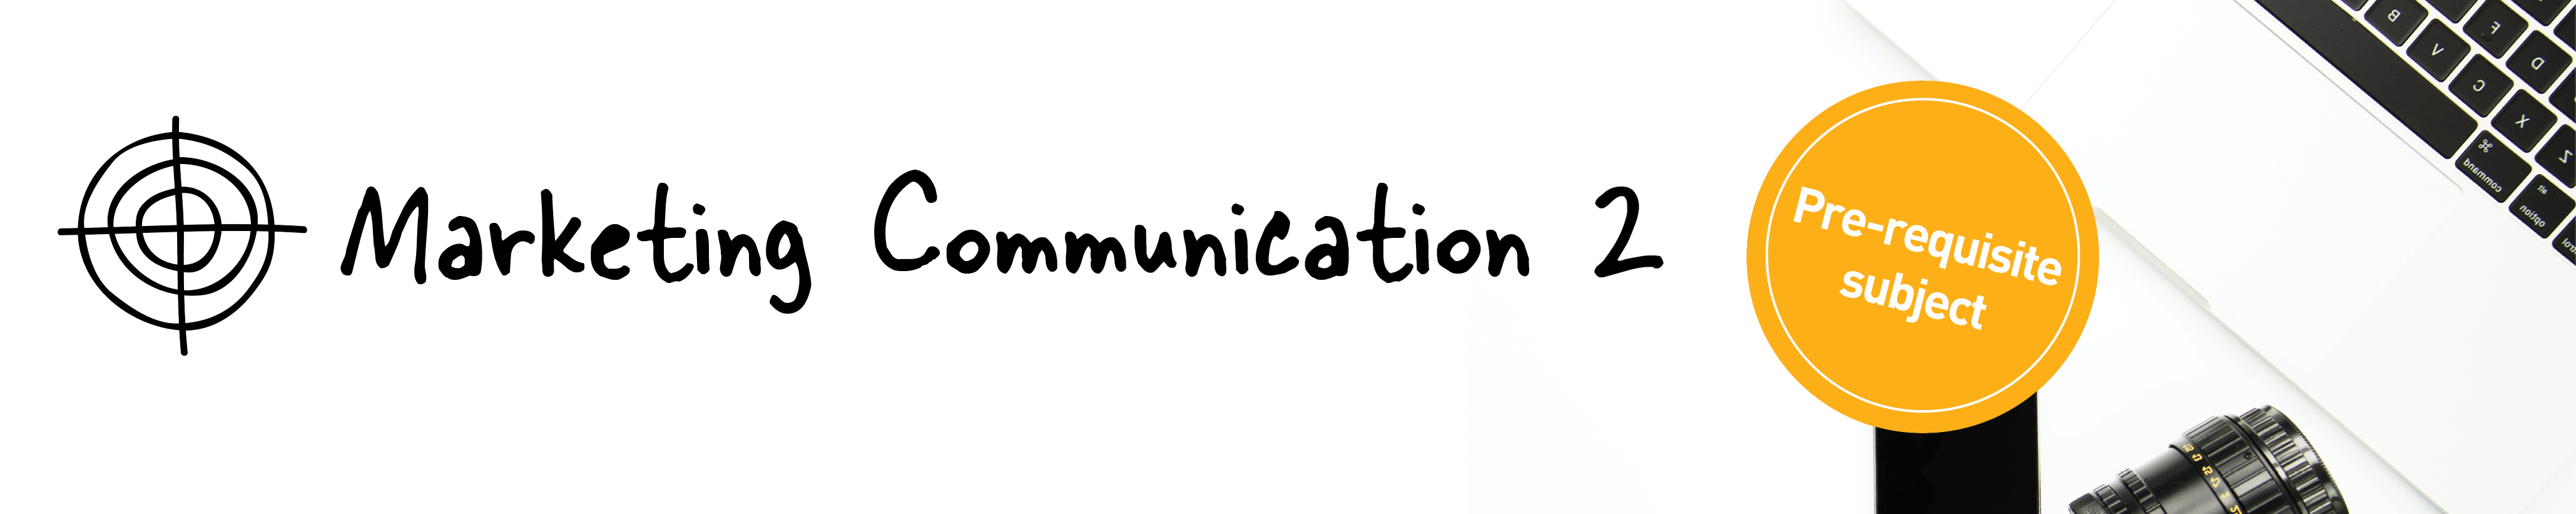 Marketing Communication 2 copy 1